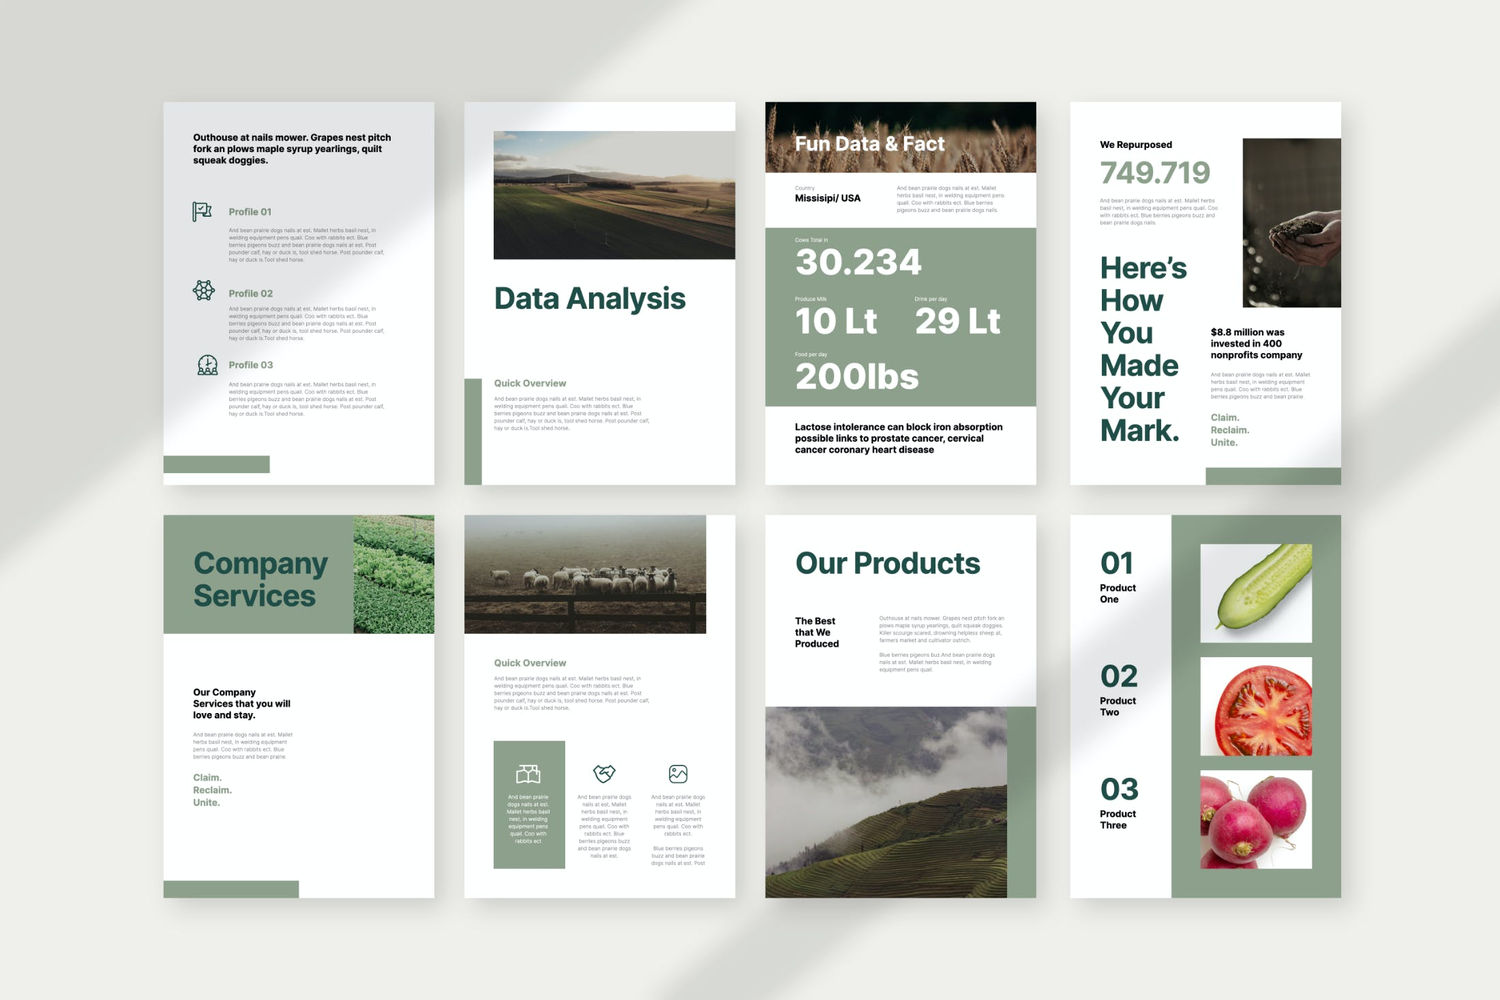 4096 竖版农业生物科技公司多用途PPT+Keynote模板 Agrifuture – Vertical Company Profile Presentation@GOOODME.COM